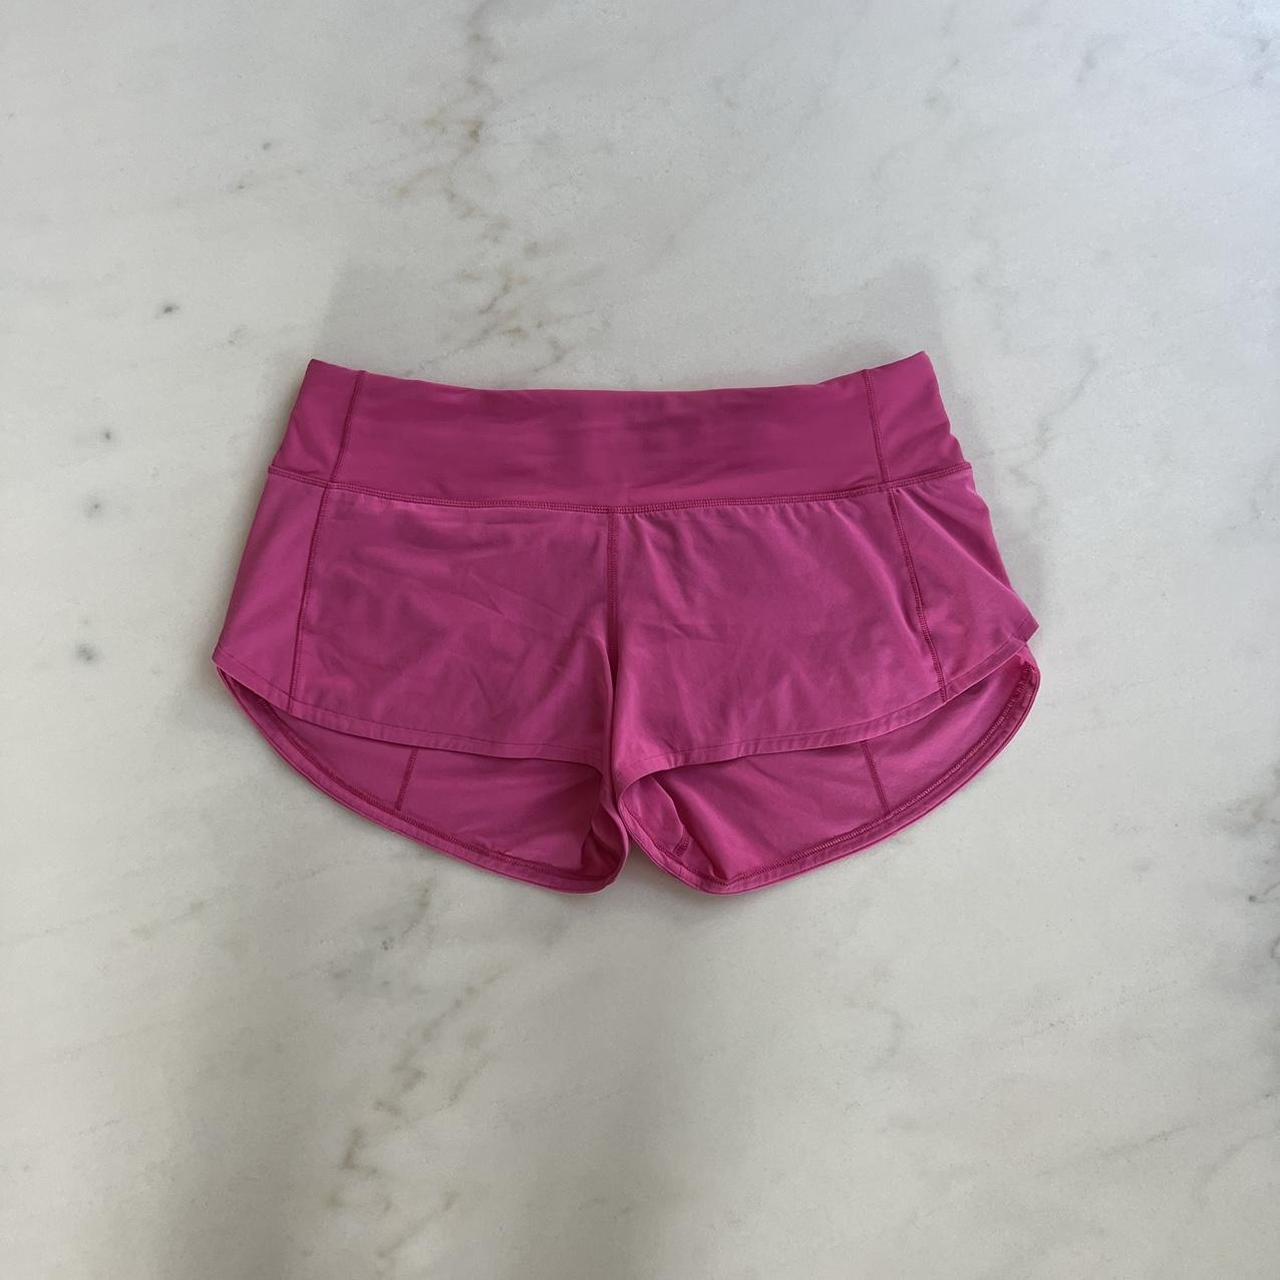 Sonic pink speed up Lululemon shorts 2.5 inch new - Depop